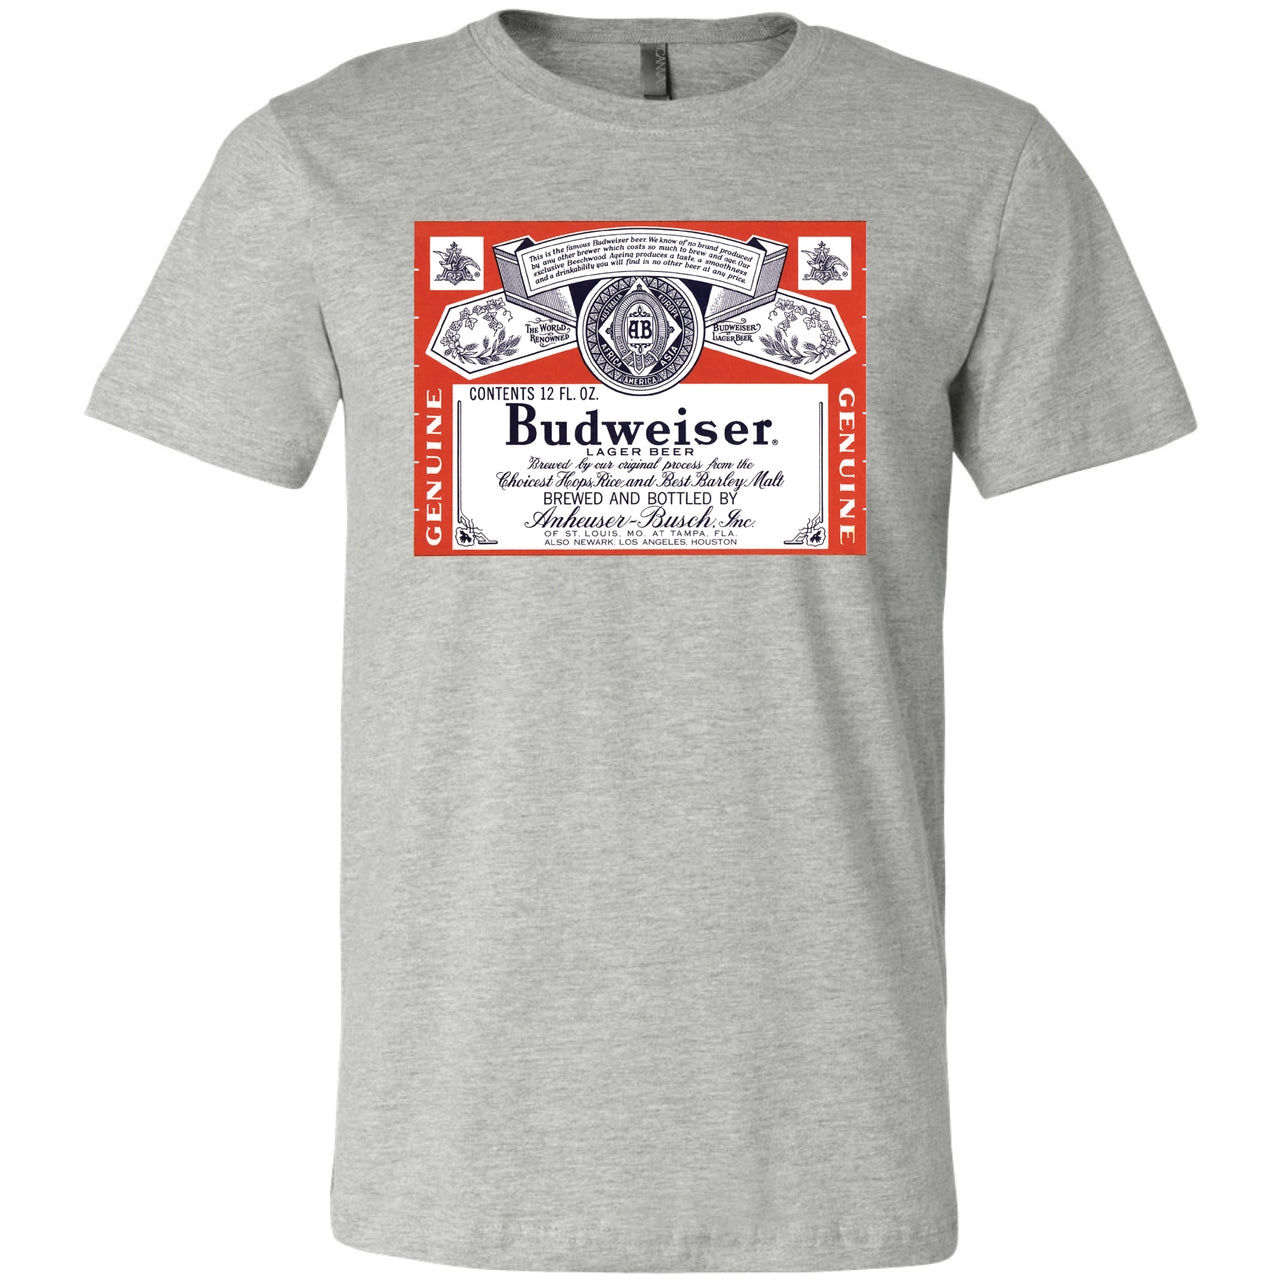 Budweiser - Vintage 1966 Label T-Shirt